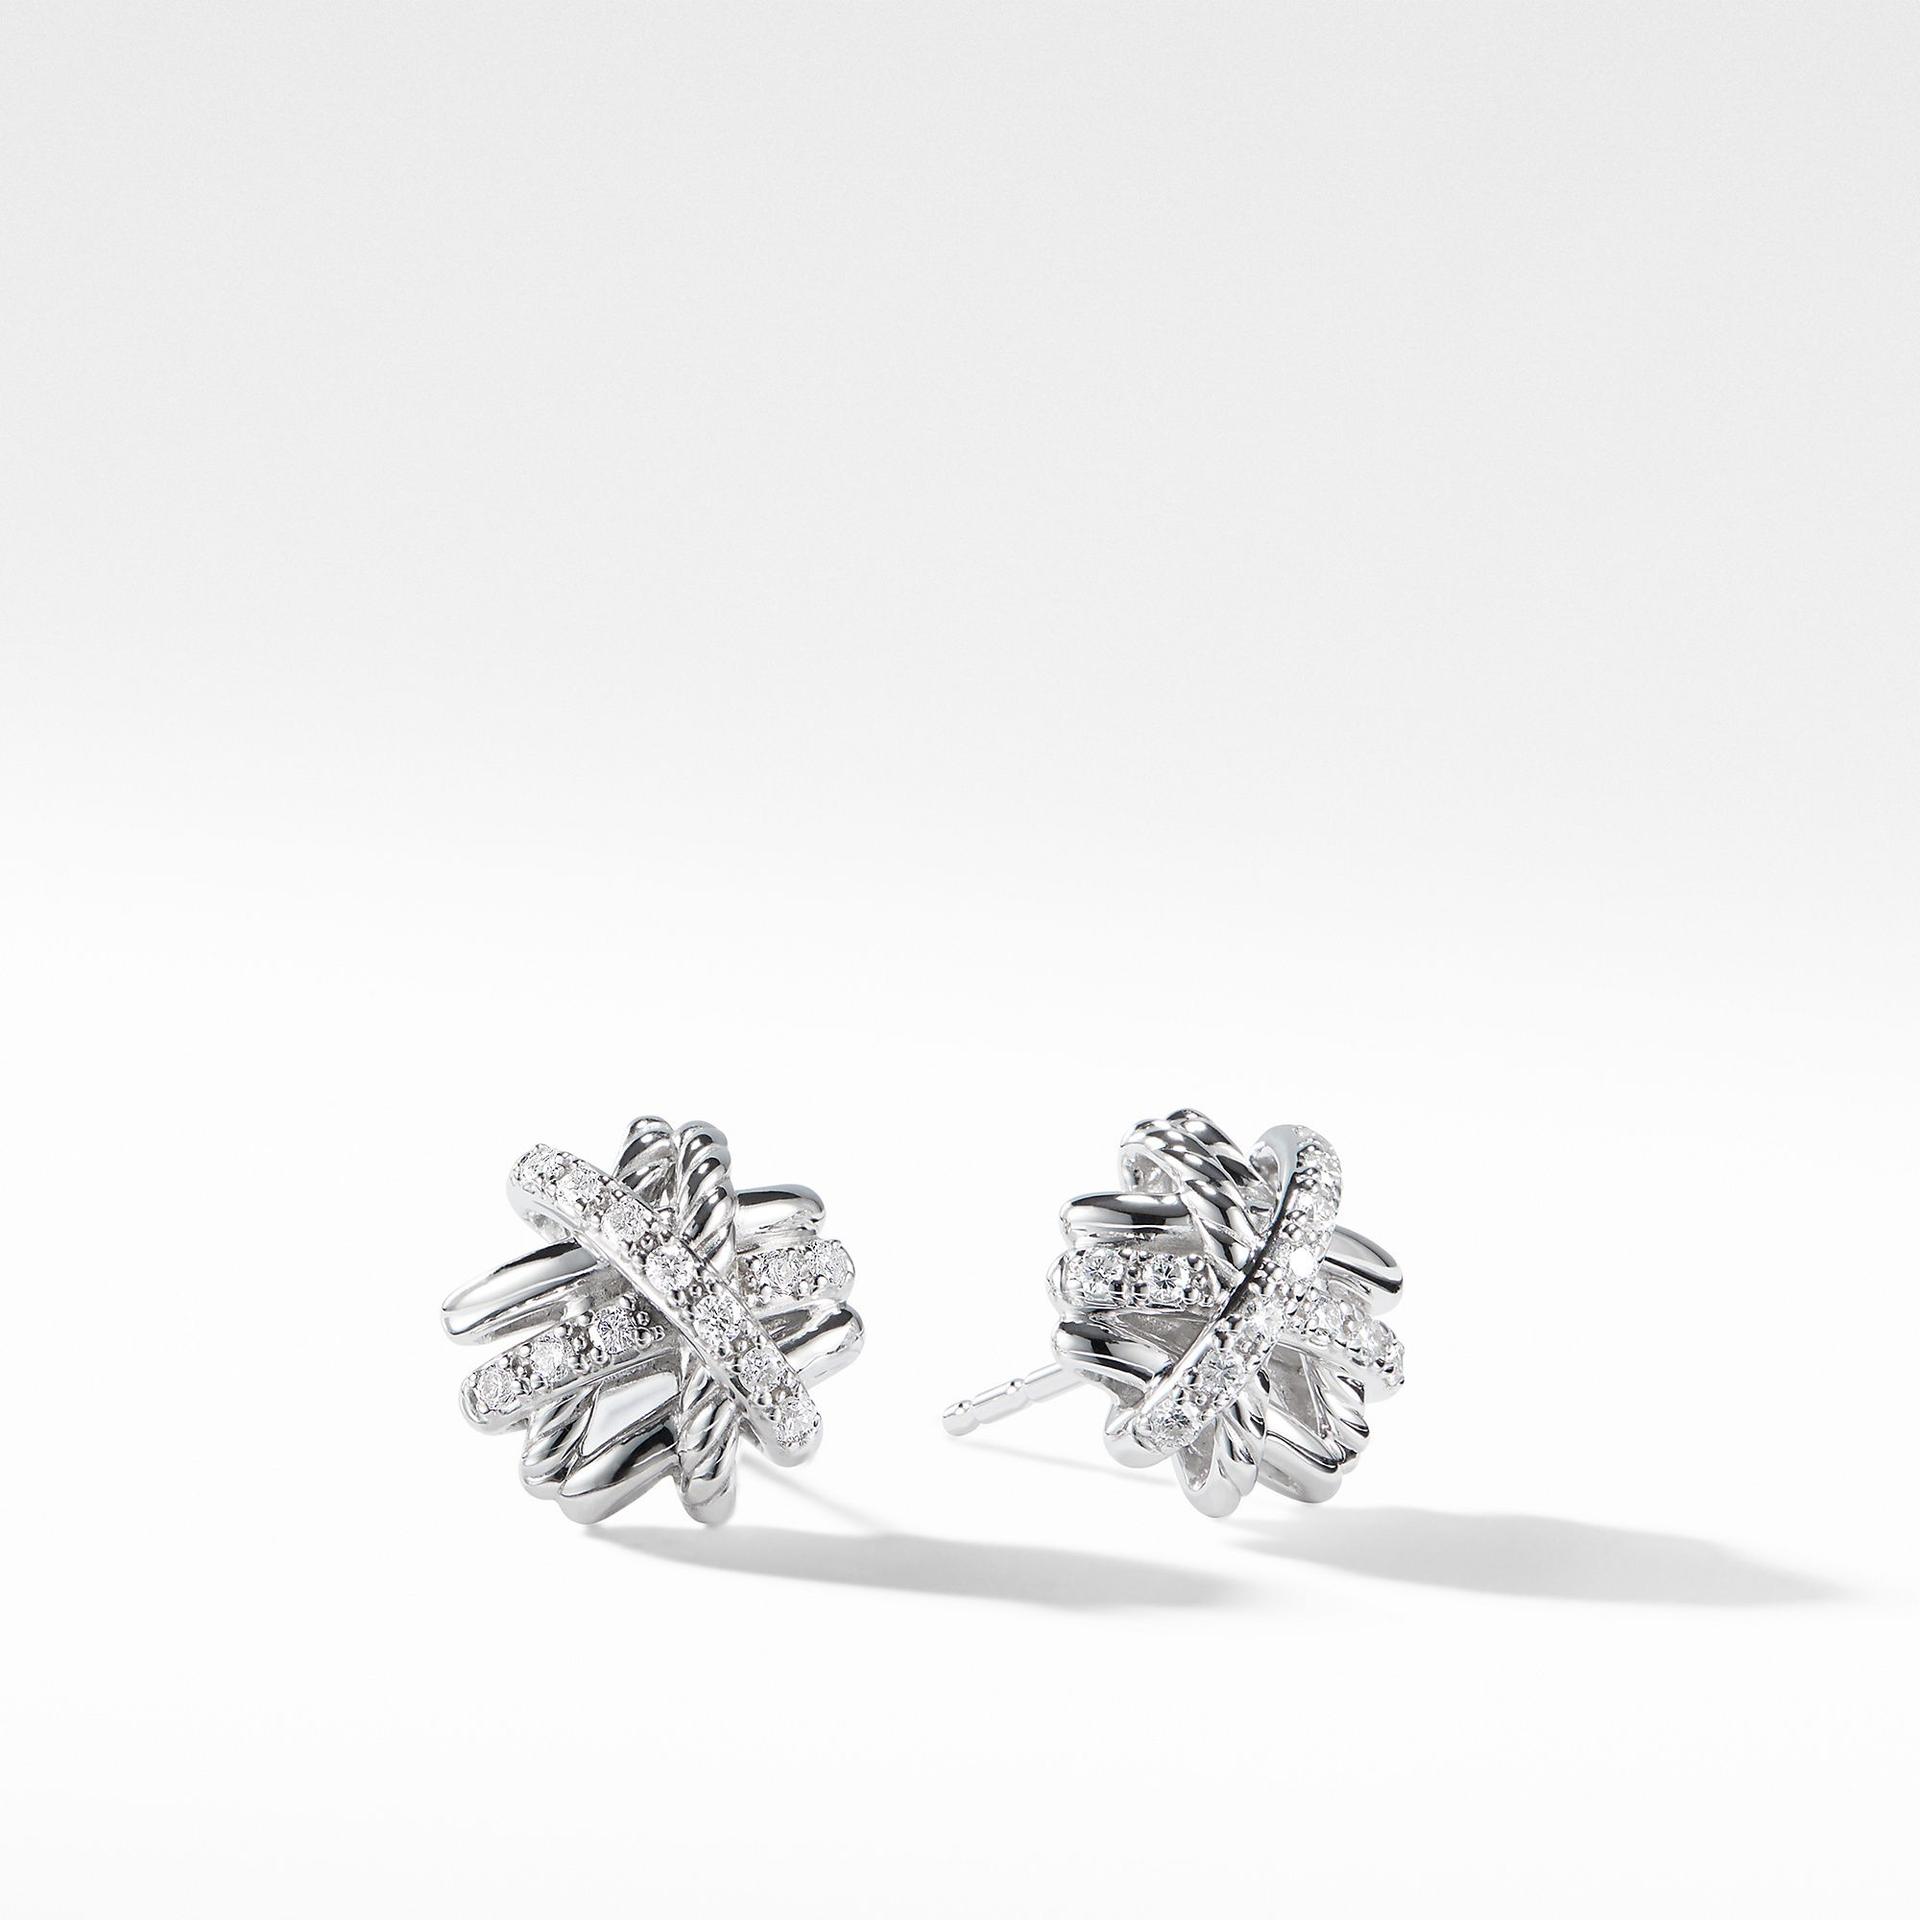 David Yurman Crossover Earrings with Diamonds, 0